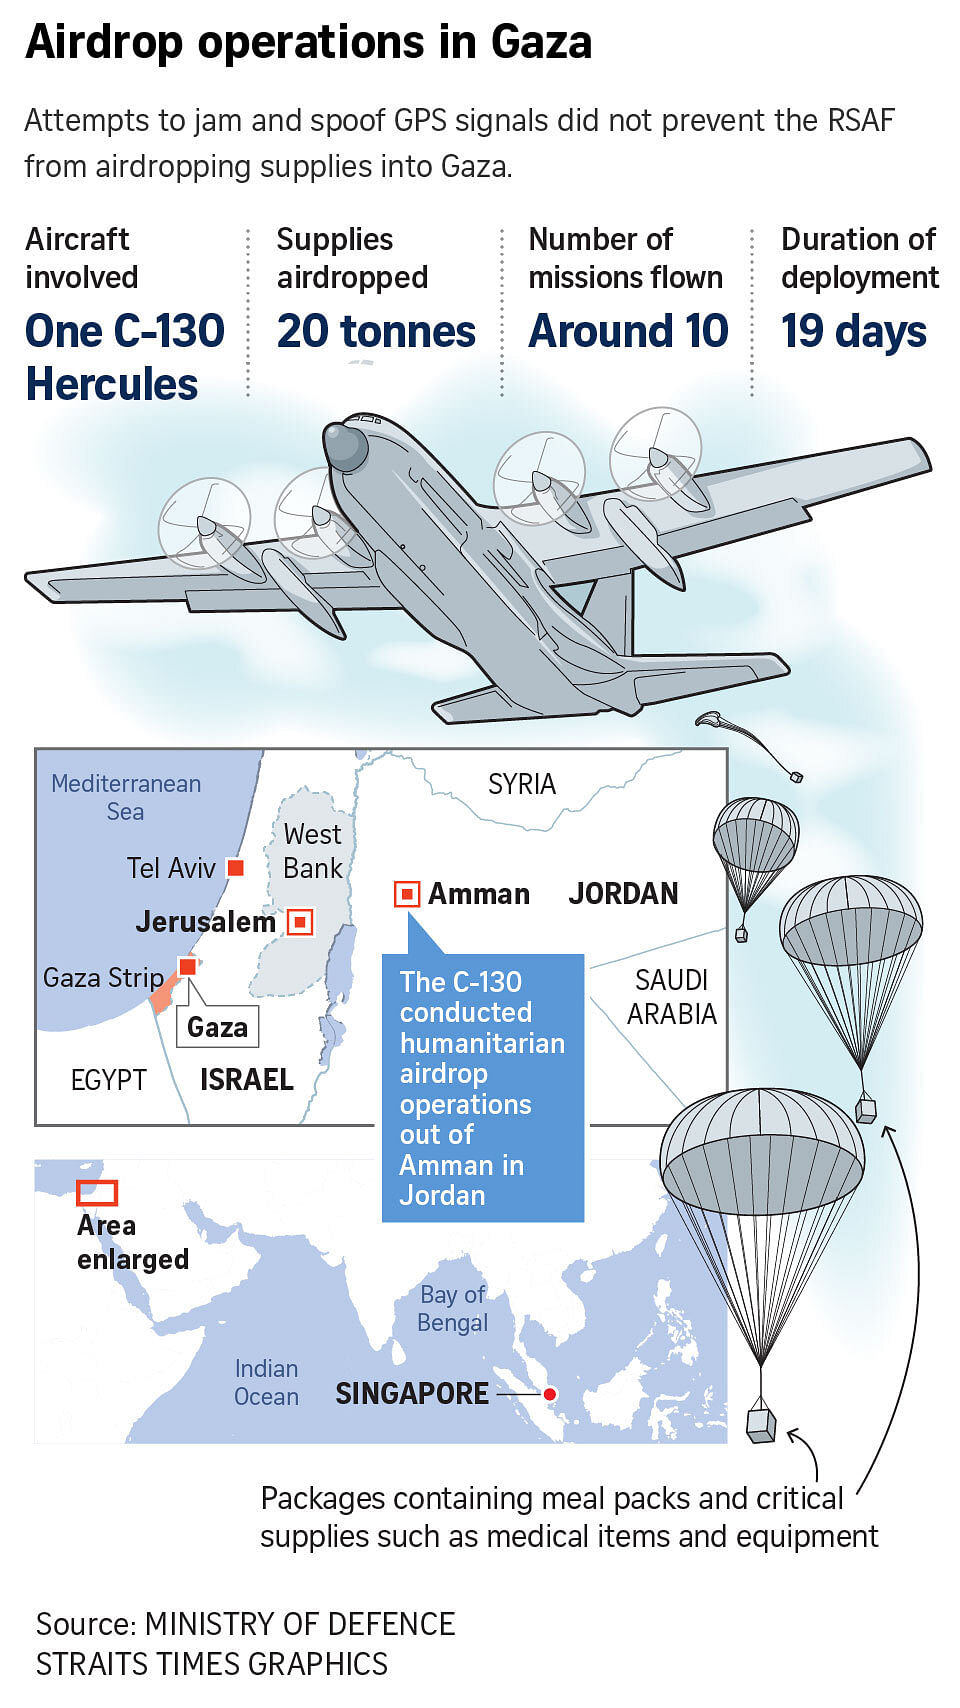 gps jamming, harsh environment: rsaf aircrew recount challenges of gaza airdrops